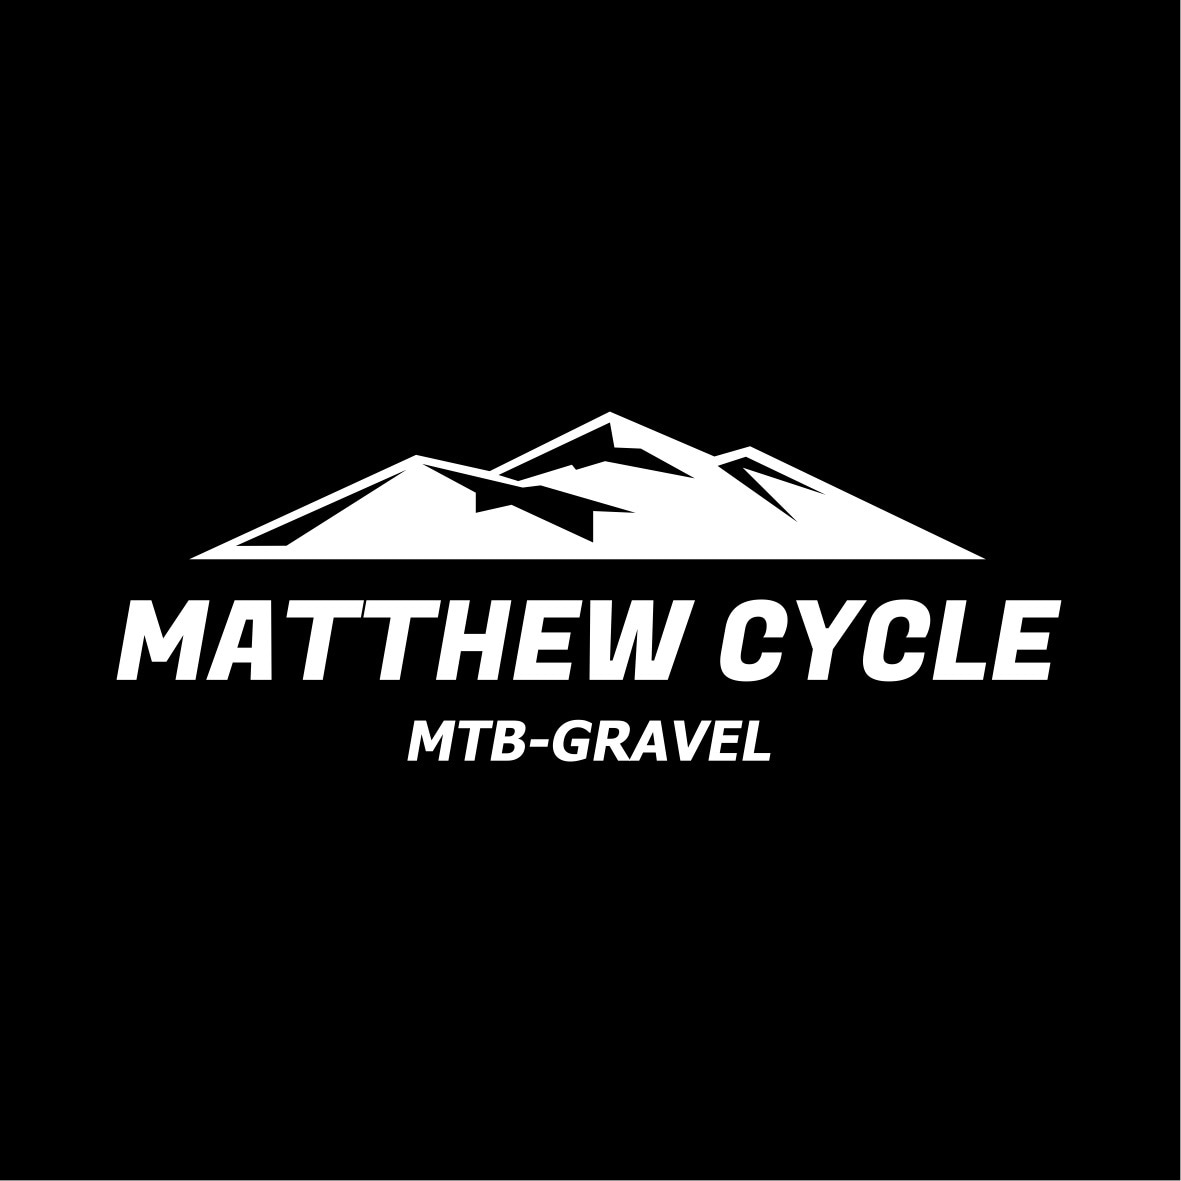 MATTHEW CYCLE